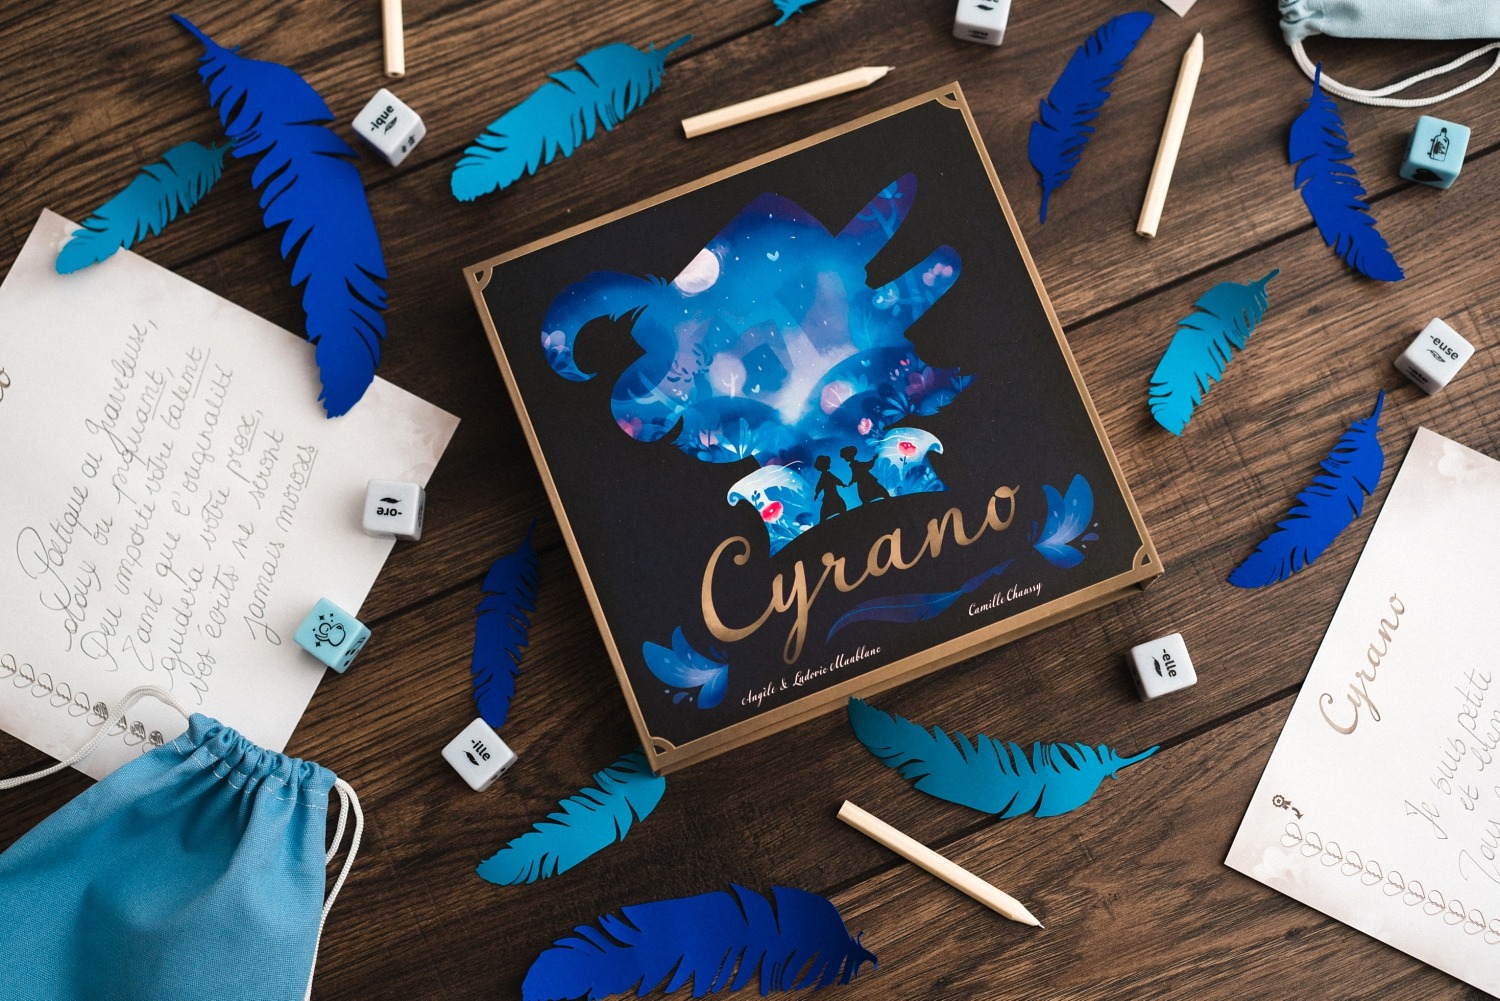 Cyrano Grrre games jeu de société boardgame photography